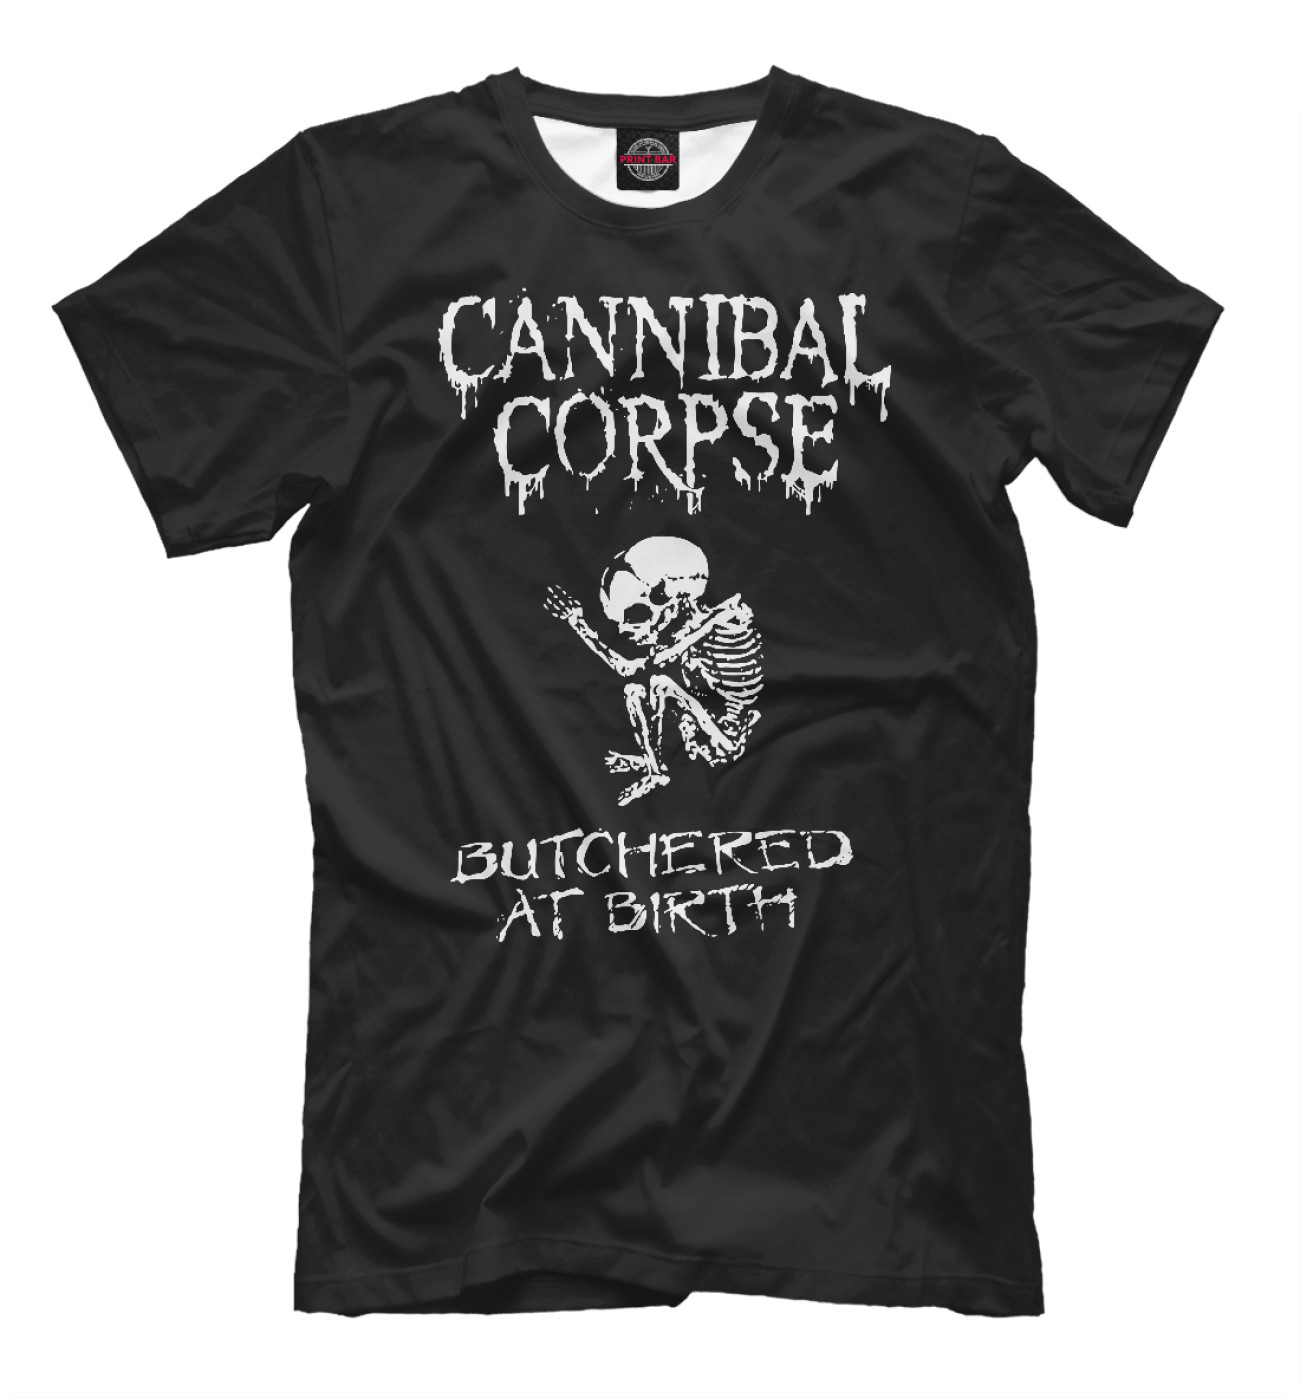 Мужская Футболка Cannibal Corpse, артикул: CCR-908590-fut-2